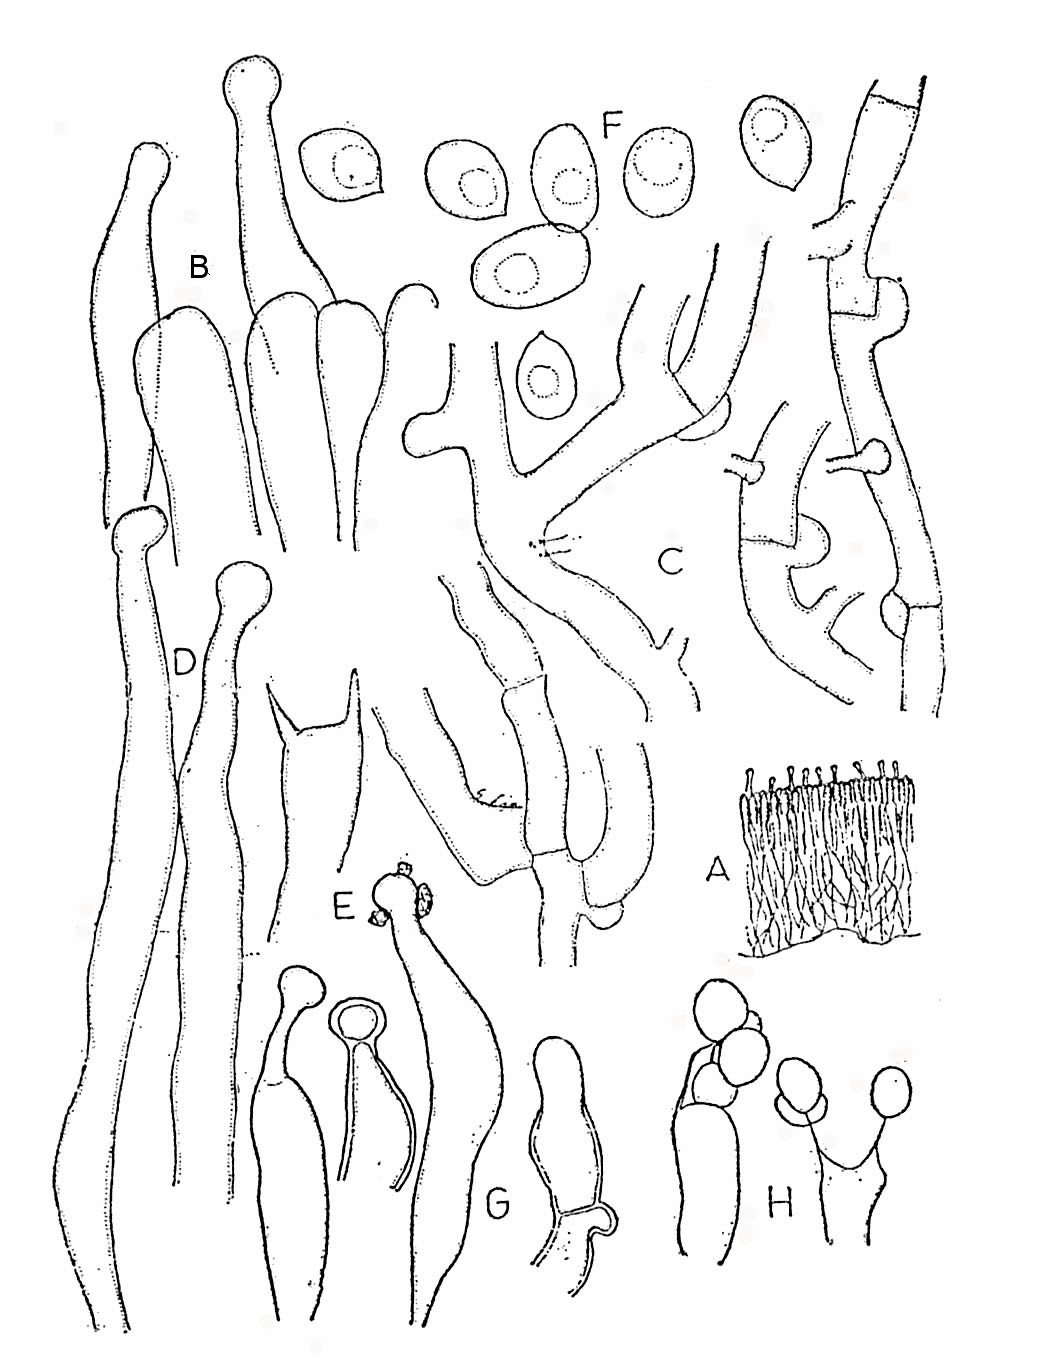 Hyphodontia sambuci (Pers.) J. Erikss.
A. Longitudinal section of basidiocarp, ×59. B. A portion of hymenium showing cystidia and paraphyses, ×1440. C. Hyphae, ×l440. D. Cystidia protruding, ×l440. E. Immature basidium with two sterigmata, ×l440. F. Basidiospores, ×l440. G. Cystidia, ×1041. H. Basidia and basidiospores, ×1041. A–F based on No. 4285; G–H based on No. 2651. 